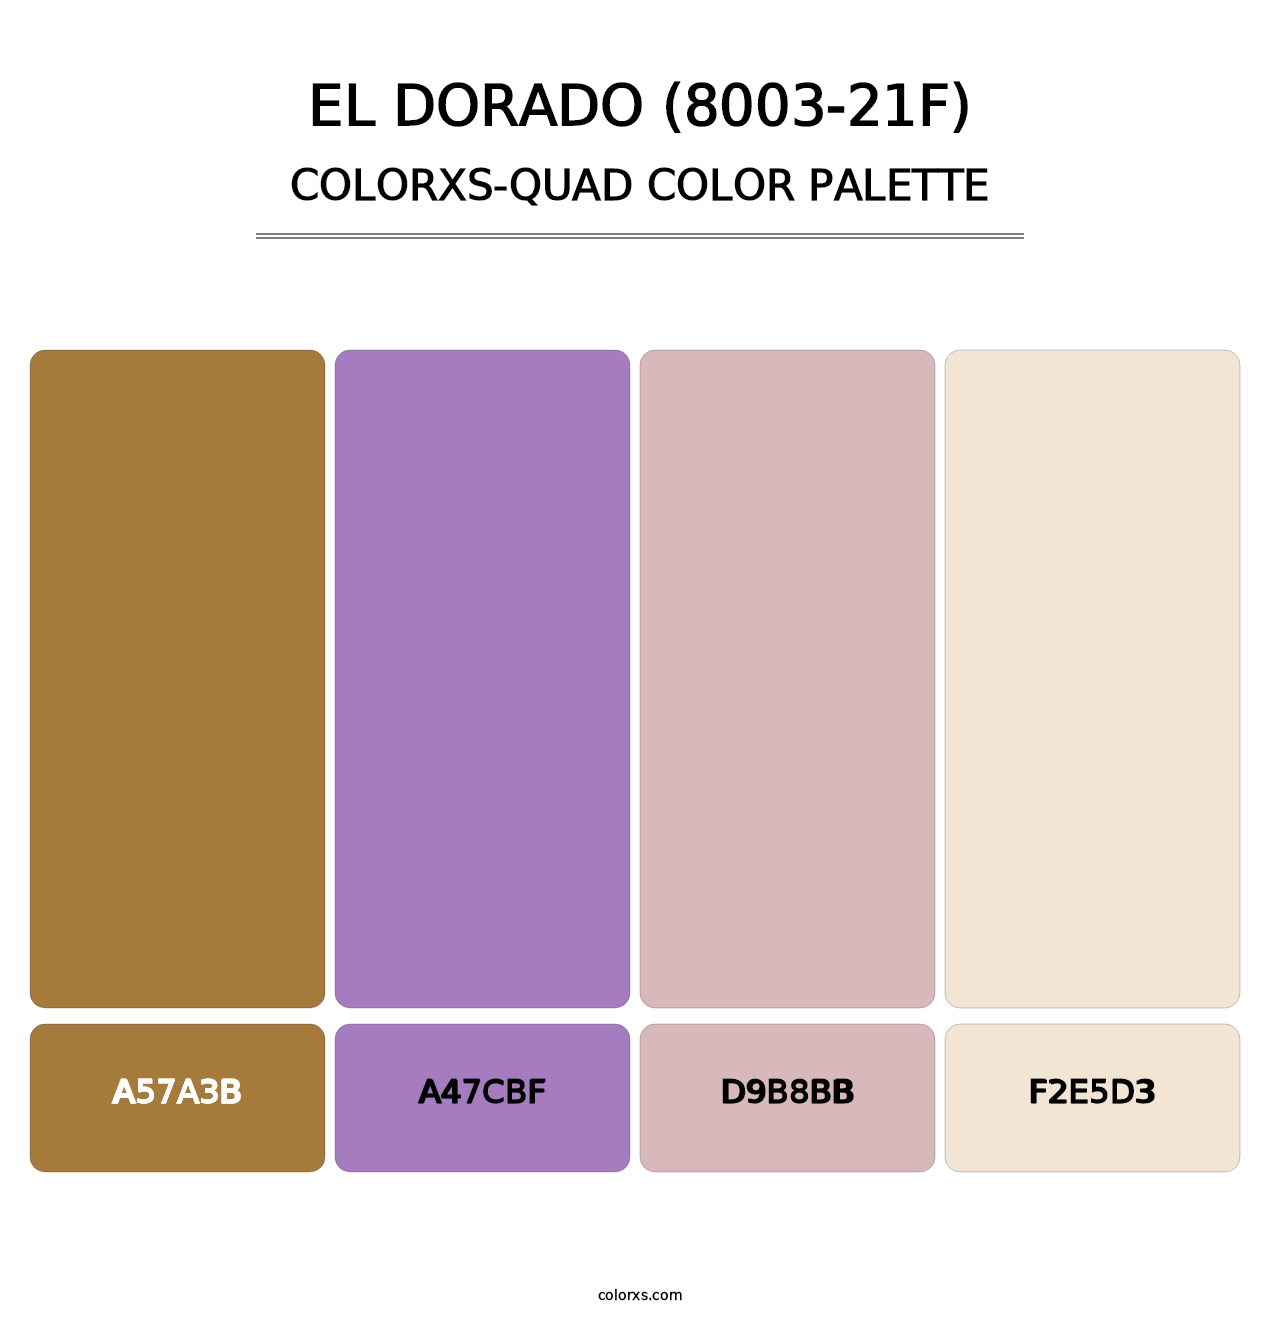 El Dorado (8003-21F) - Colorxs Quad Palette